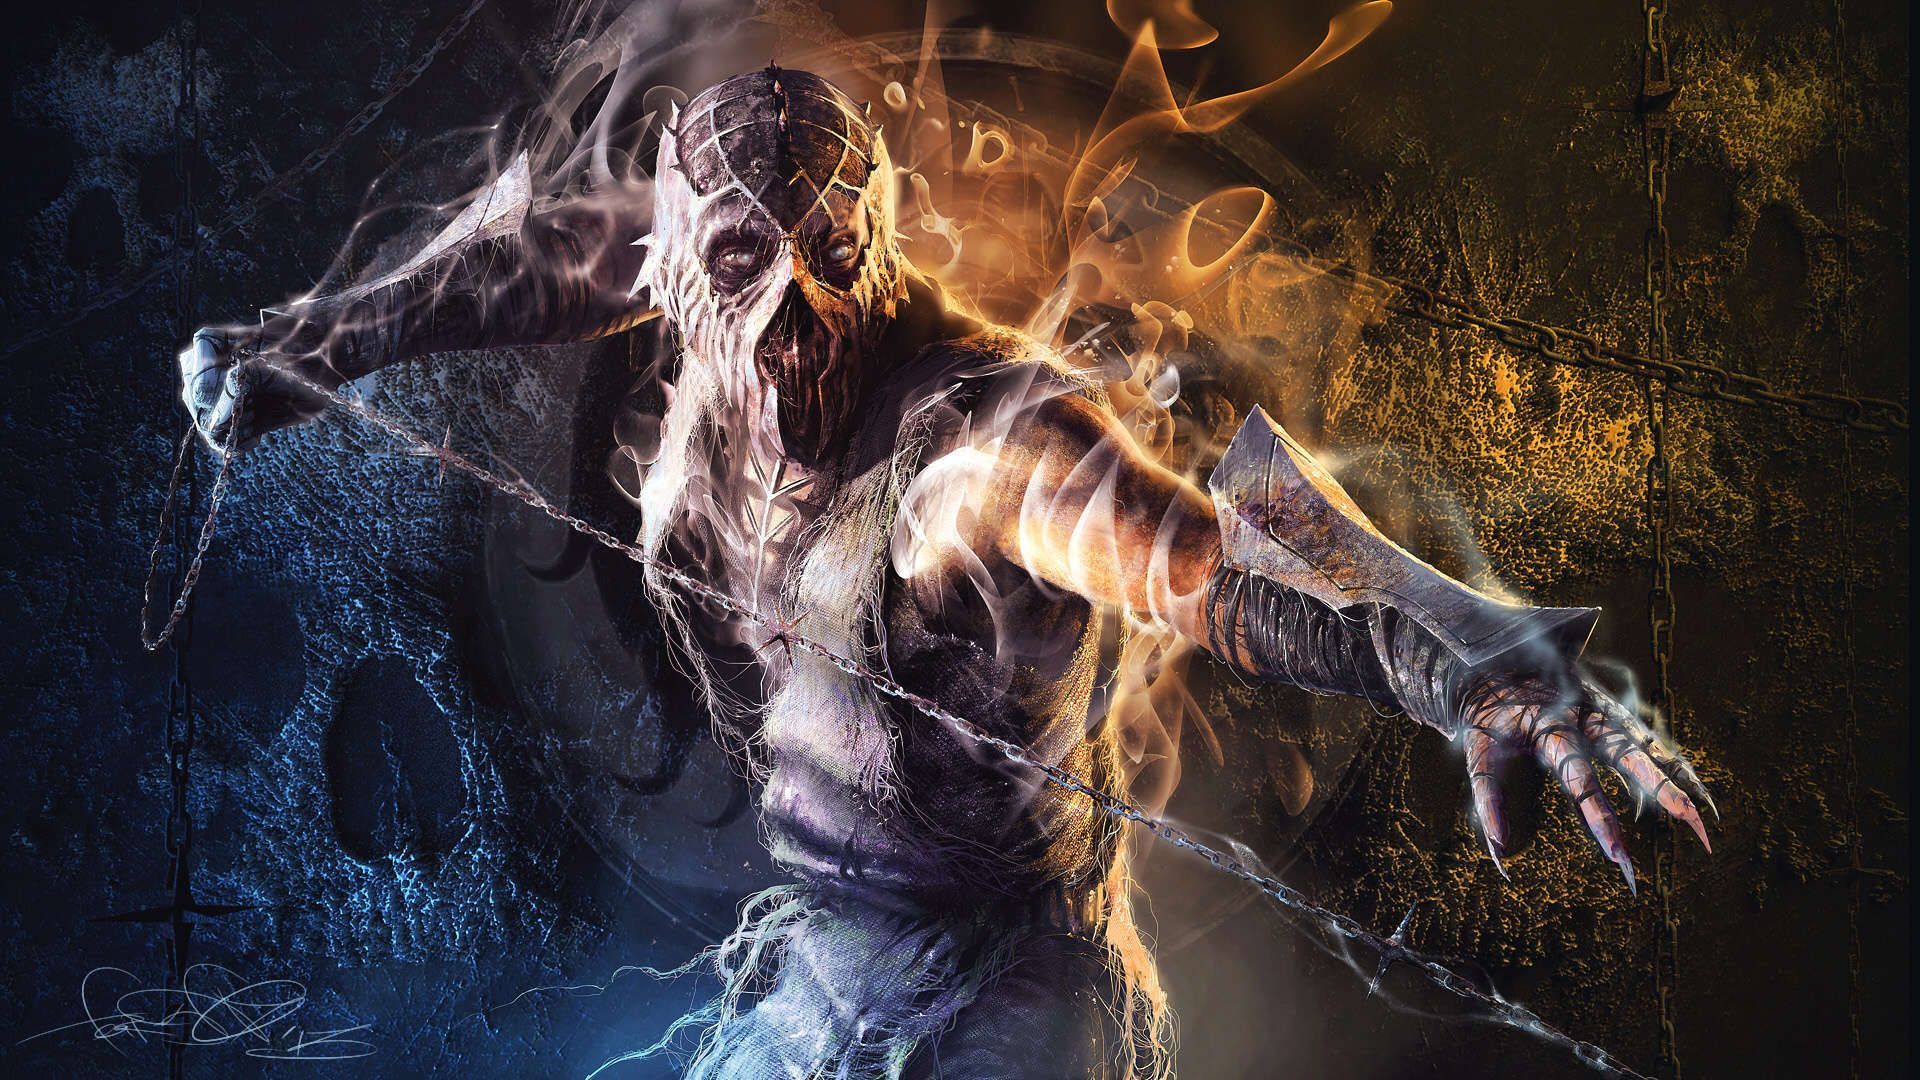 Mortal Kombat X Wallpaper HD. Mortal kombat art, Mortal kombat x wallpaper, Mortal kombat